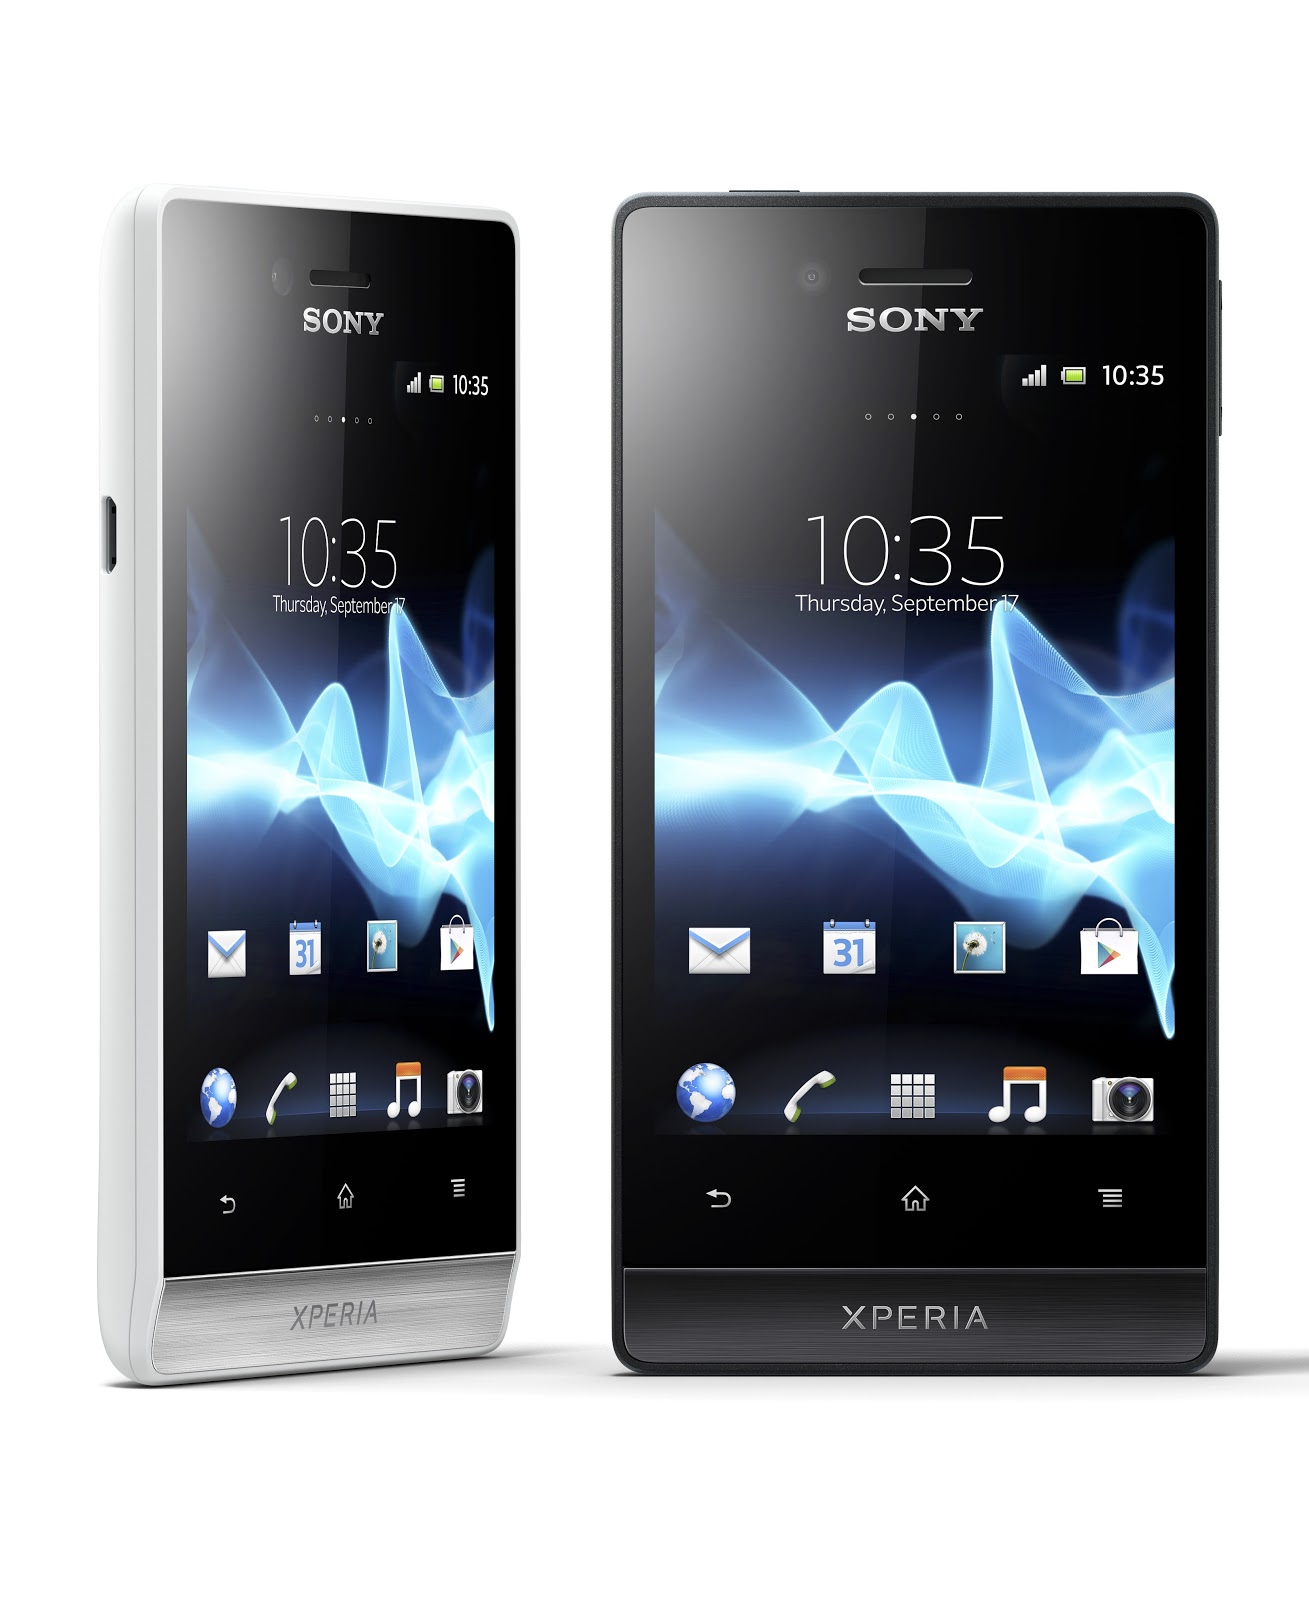 Xperia 14. Sony Xperia Miro smartphone. Sony Xperia 2013. Sony Xperia 2011. Sony Xperia tipo.